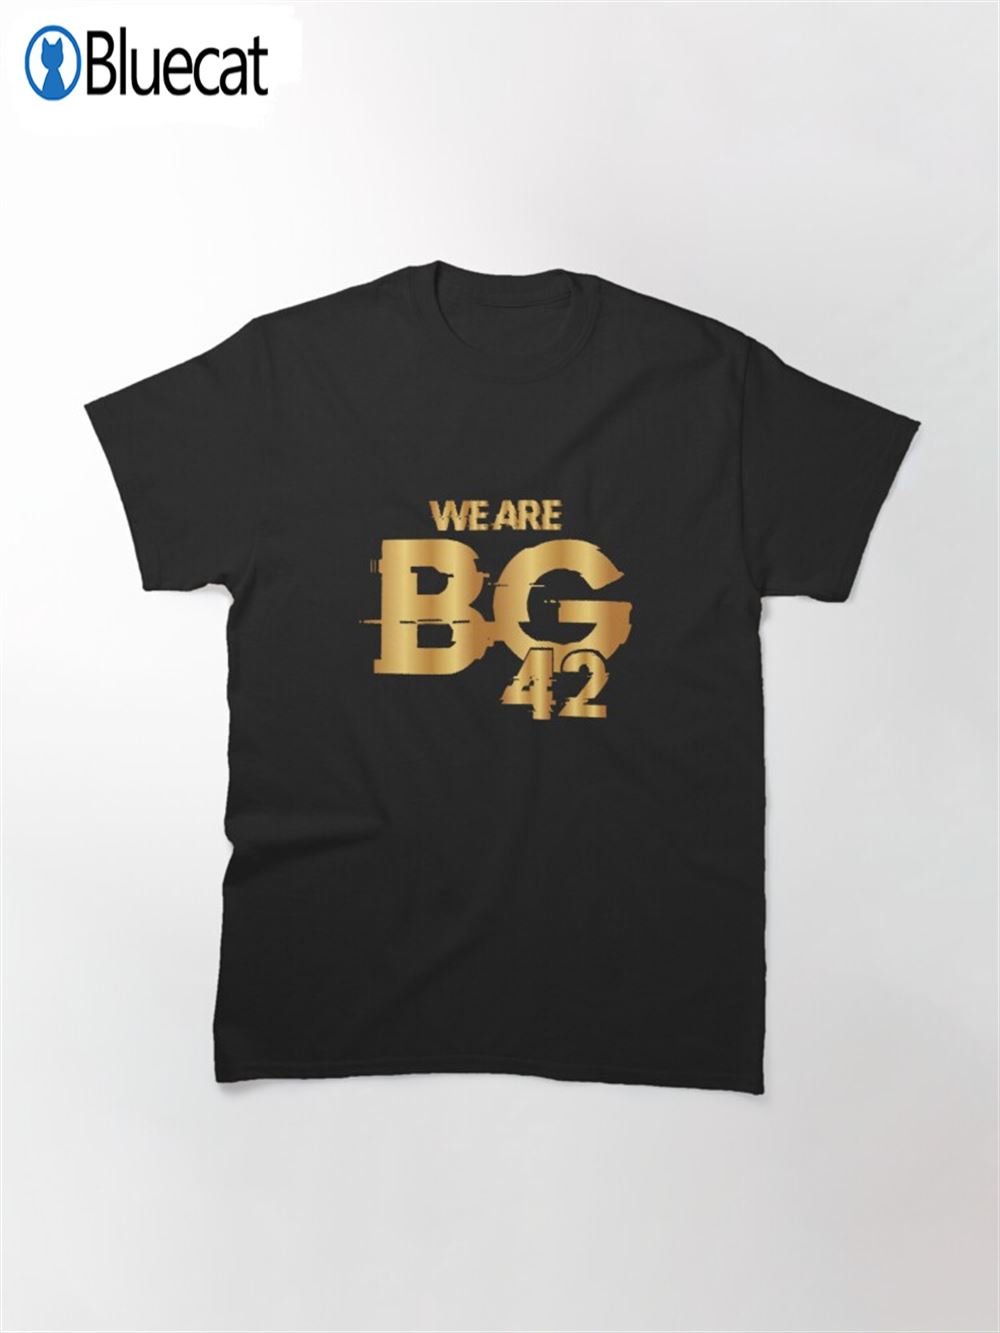 We Are Bg 42 Brittney Griner Shirt